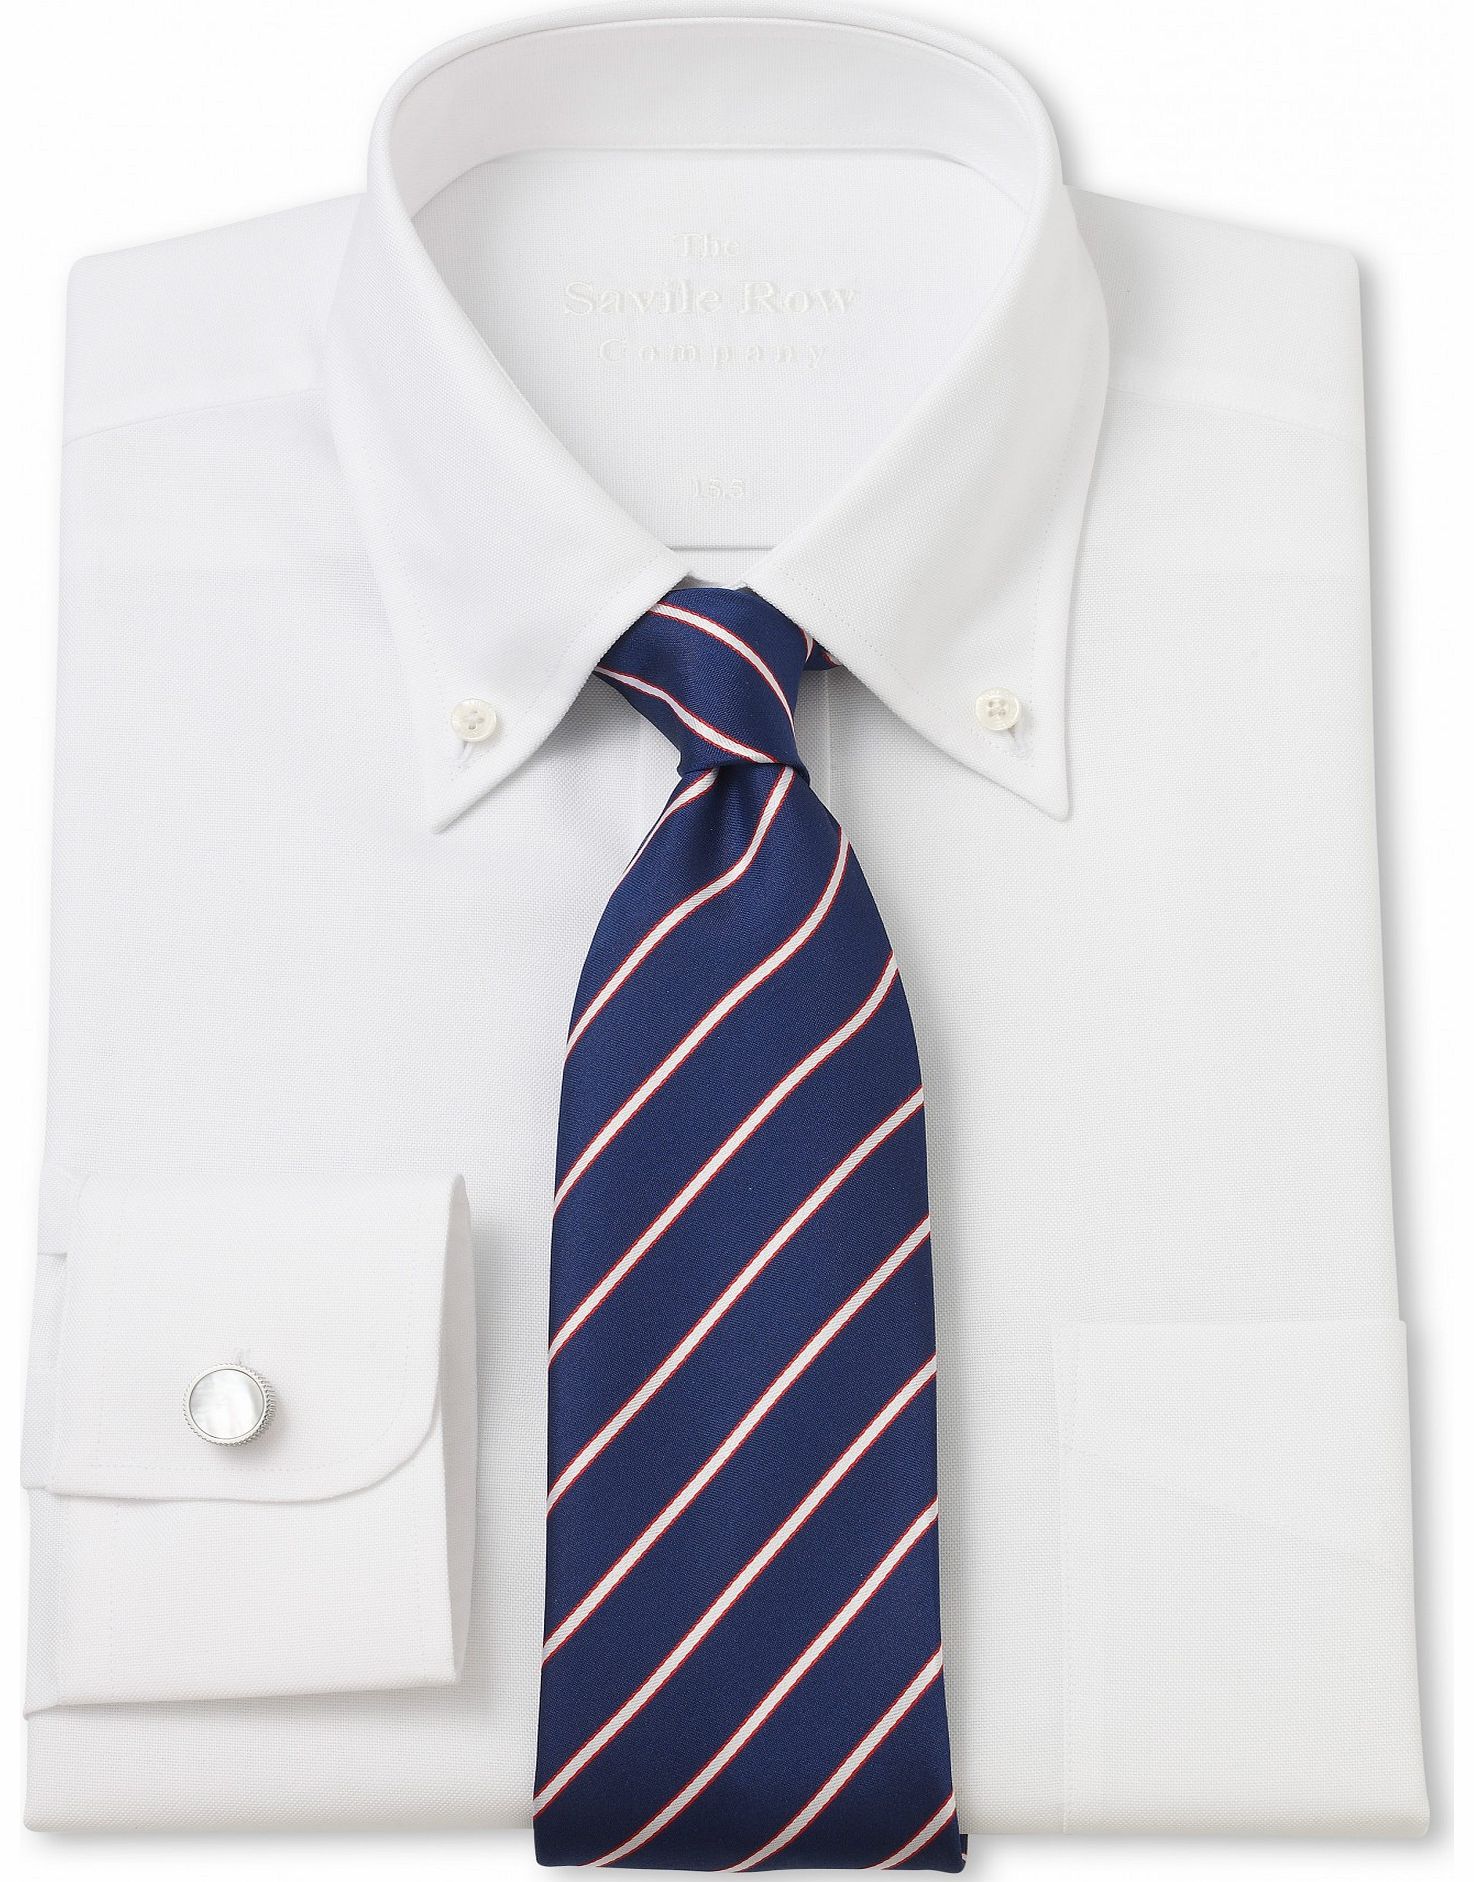 Savile Row Company White Oxford Button Down Classic Shirt 18 1/2``